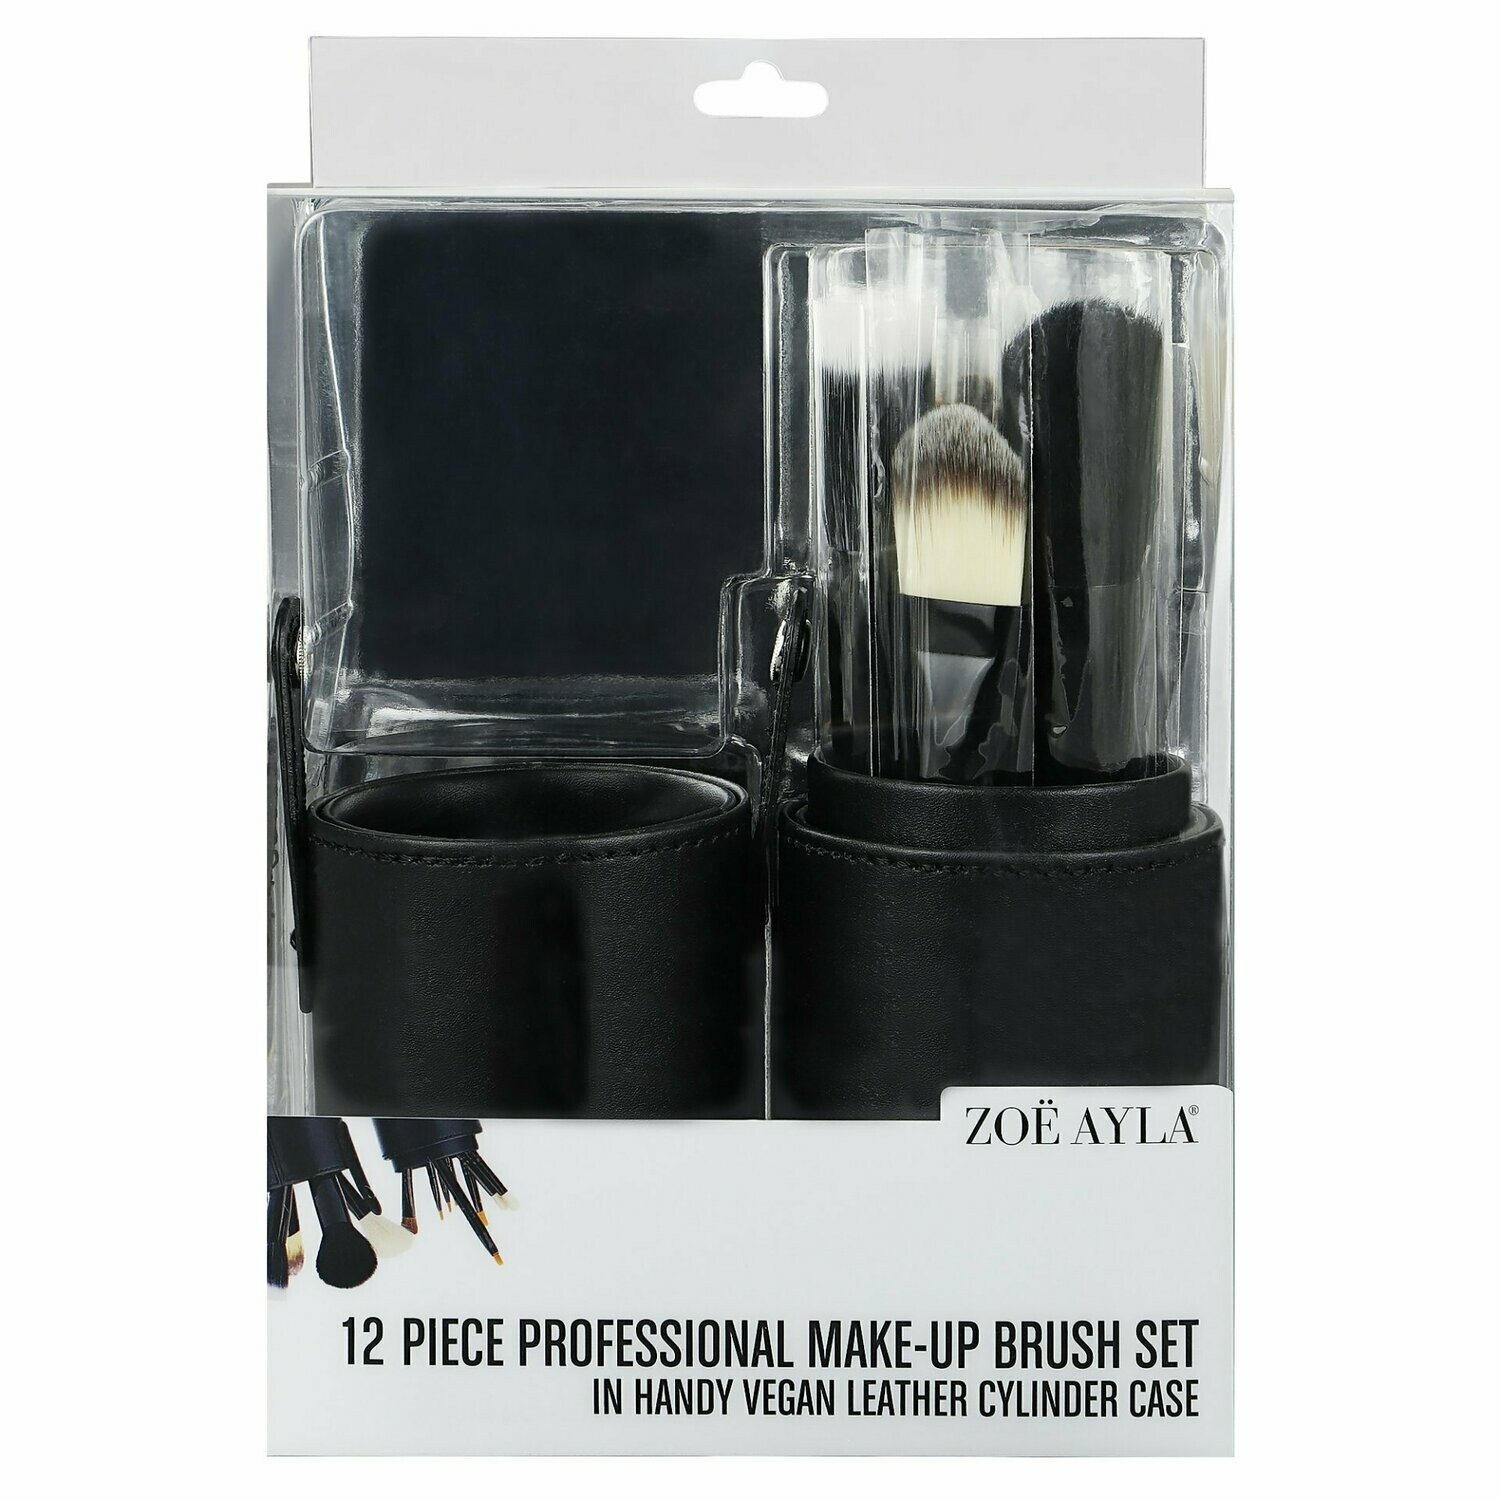 12 Piece Professional Make-up Brush Set